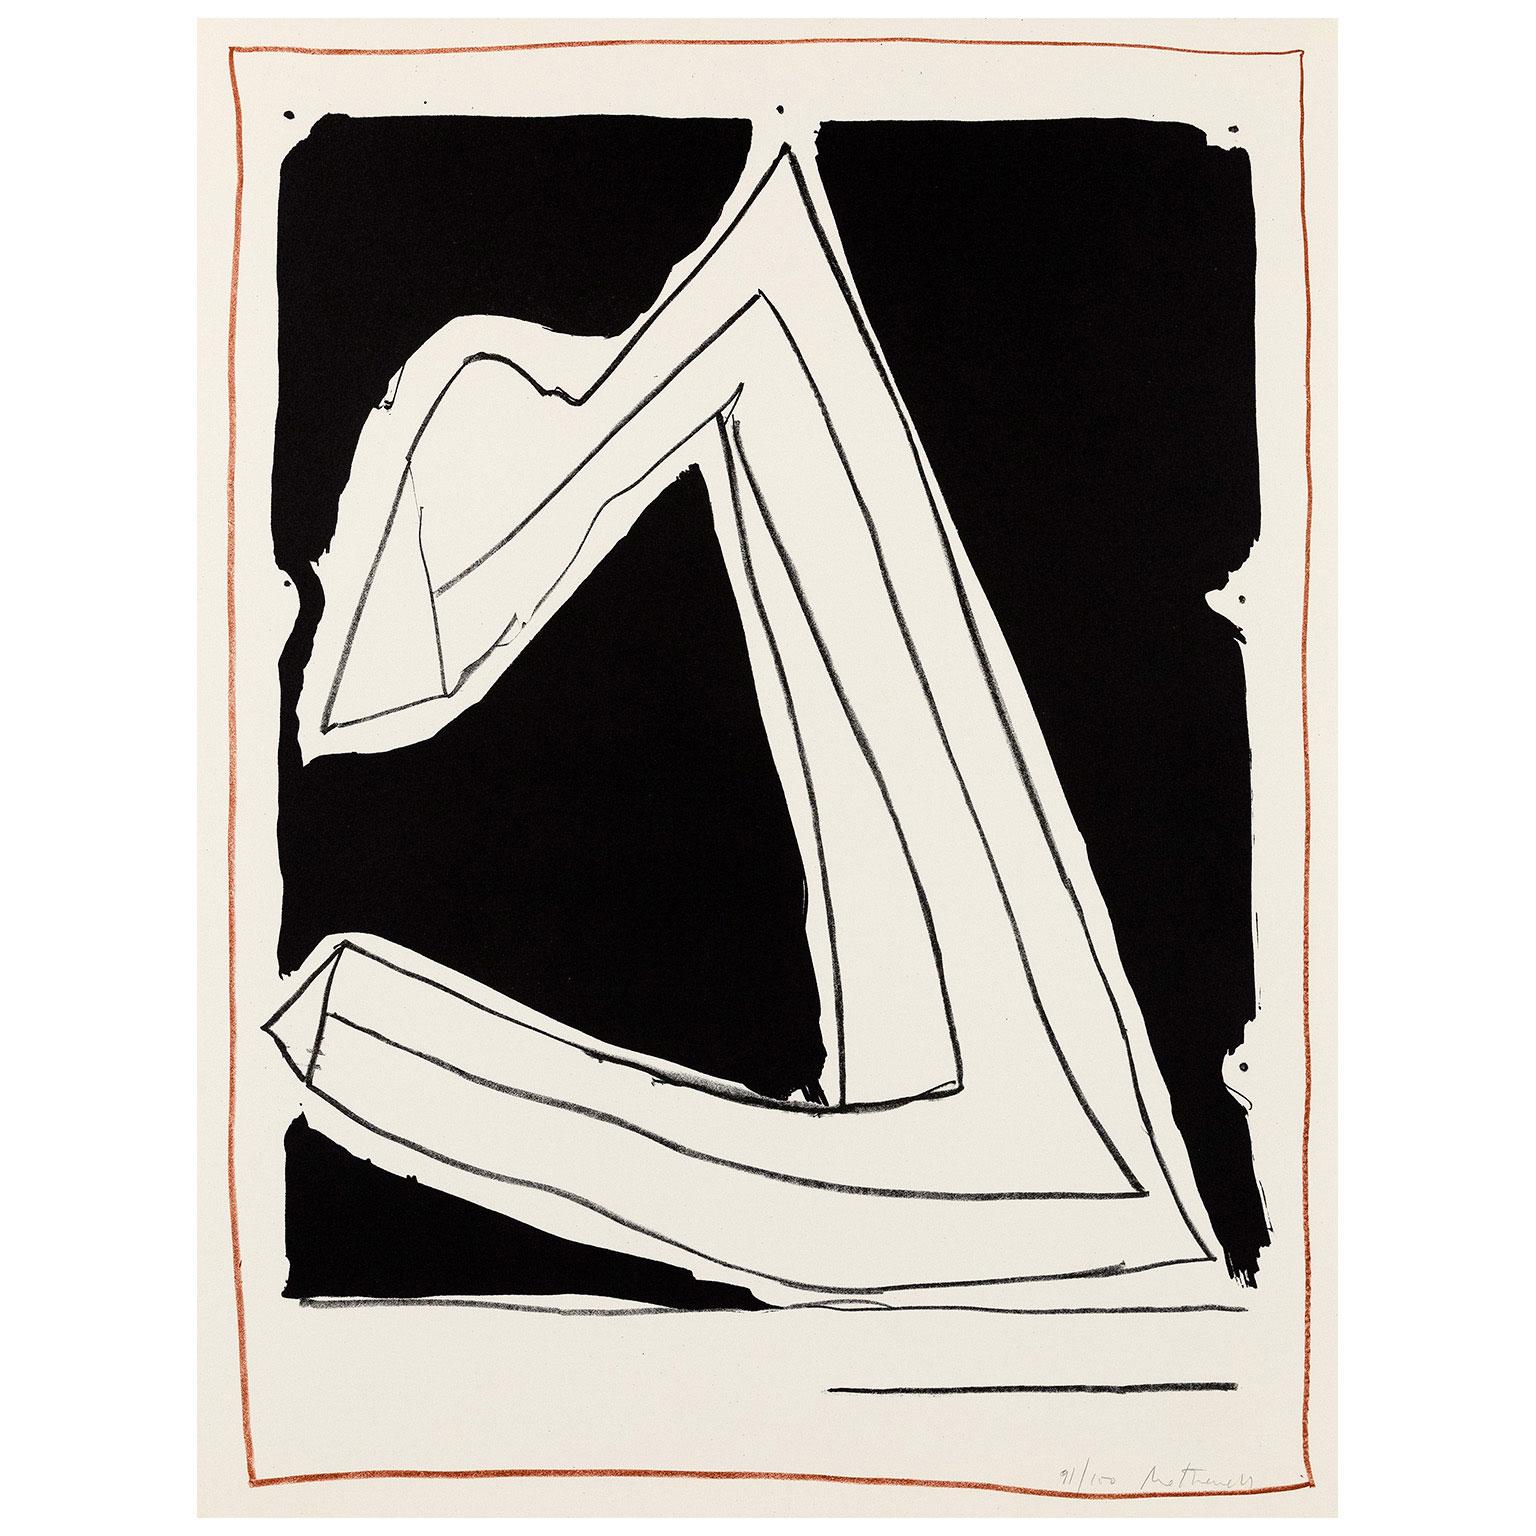 Abstract Print Robert Motherwell - L'été en Italie (avec des lignes)